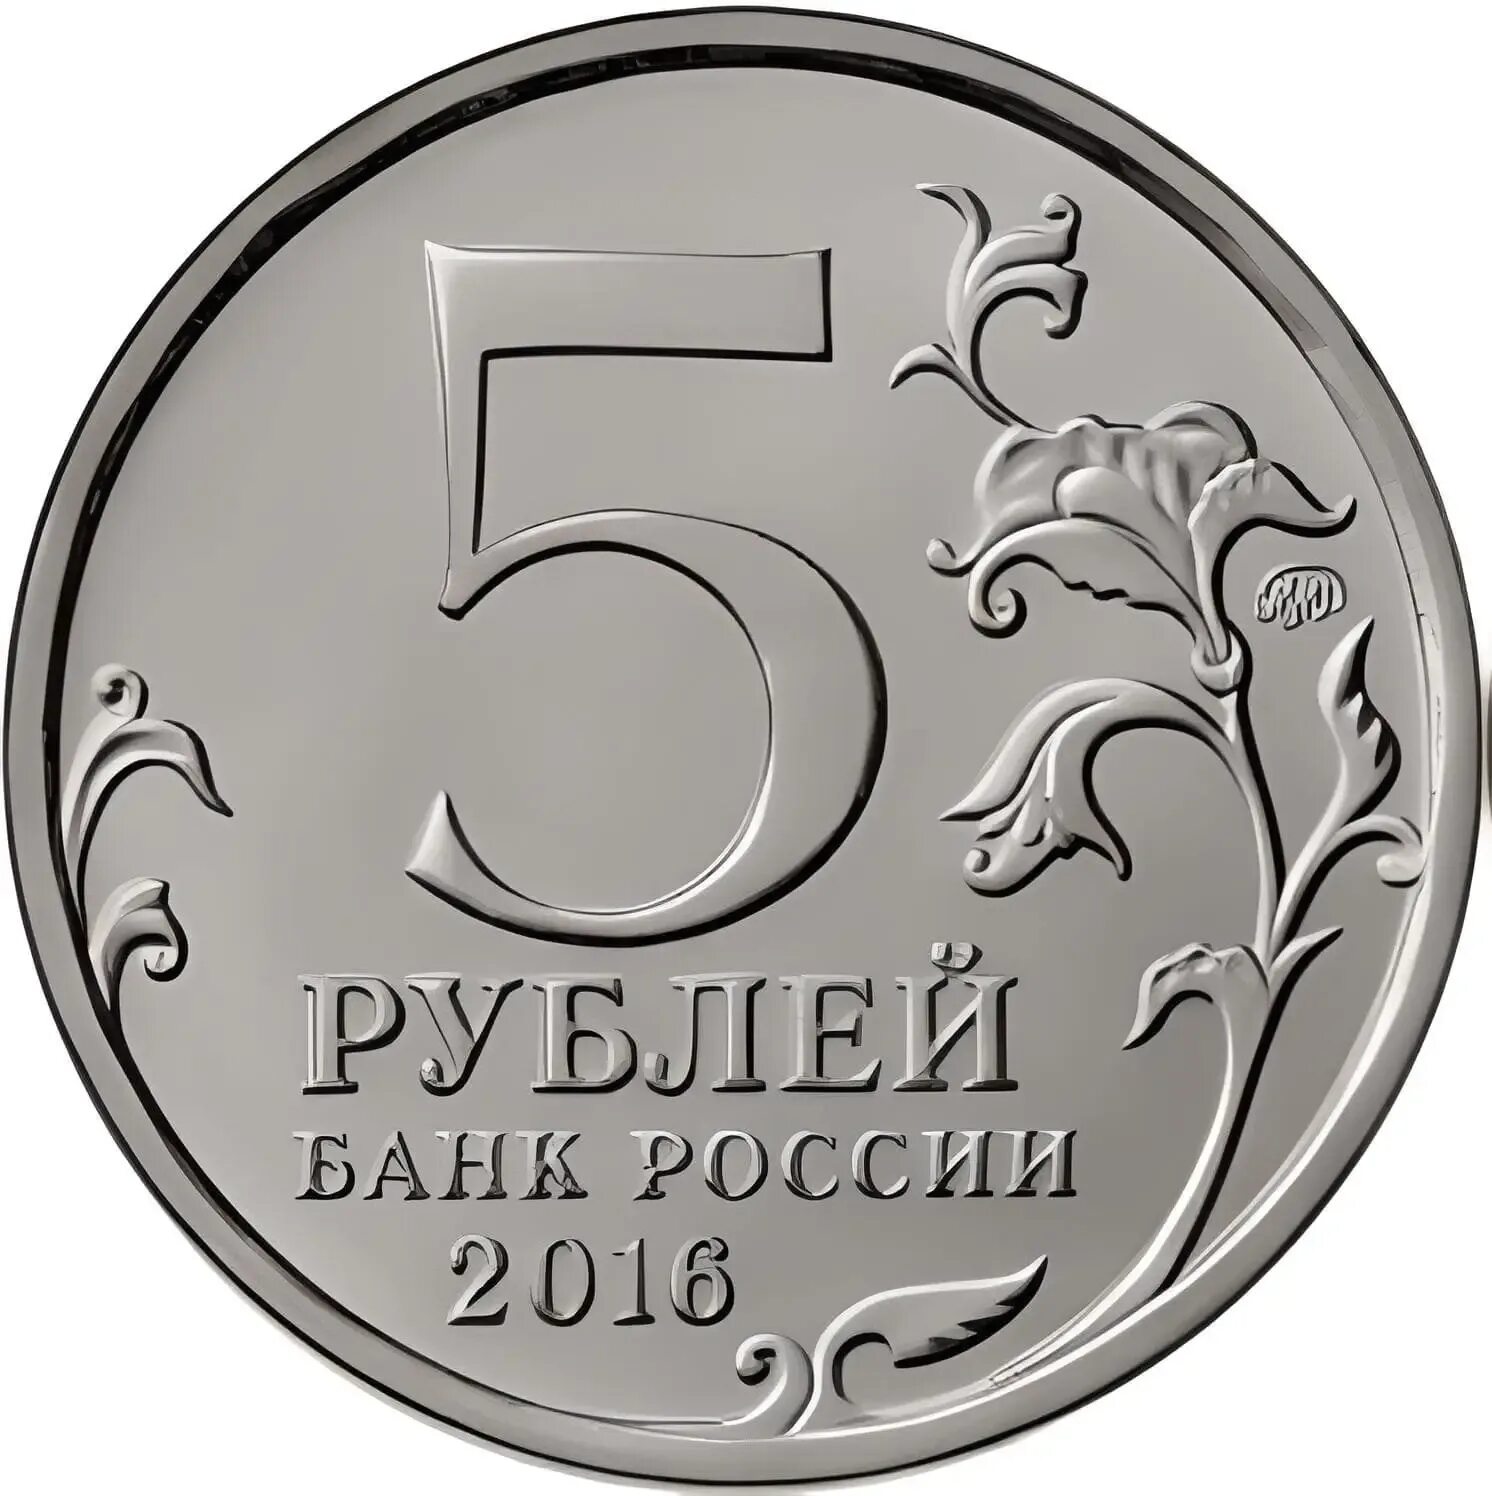 5 руб монета рубль. Монета 5 рублей. Изображение 5 рублей. Монета 2 рубля на прозрачном фоне. Монета 5 руб для фотошопа.